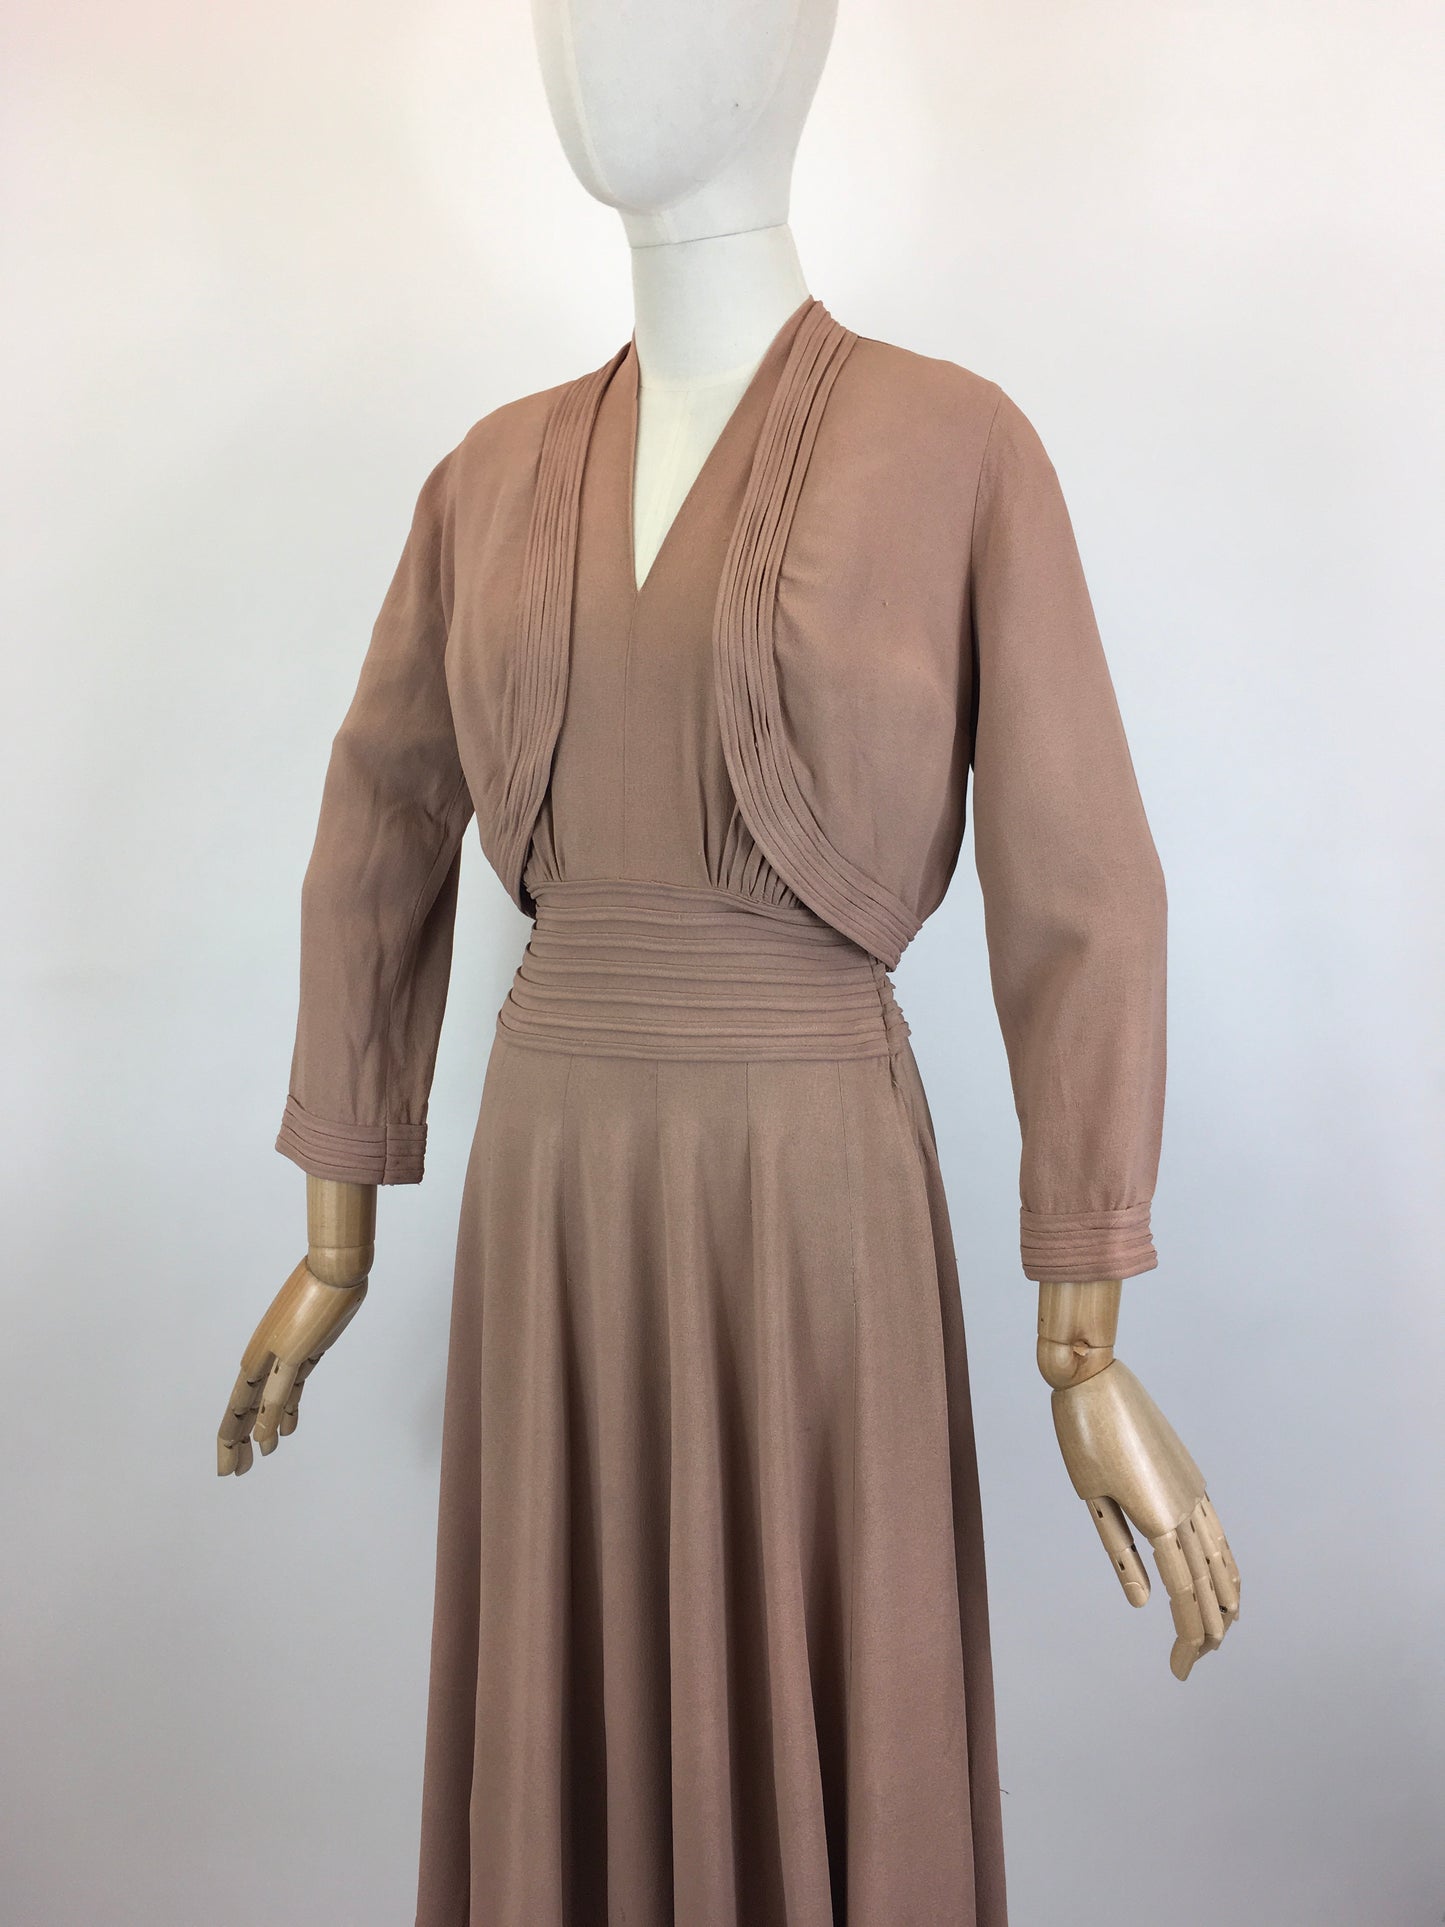 Original 1940’s Stunning Crepe Dress with Matching Bolero - In Powdered Rose